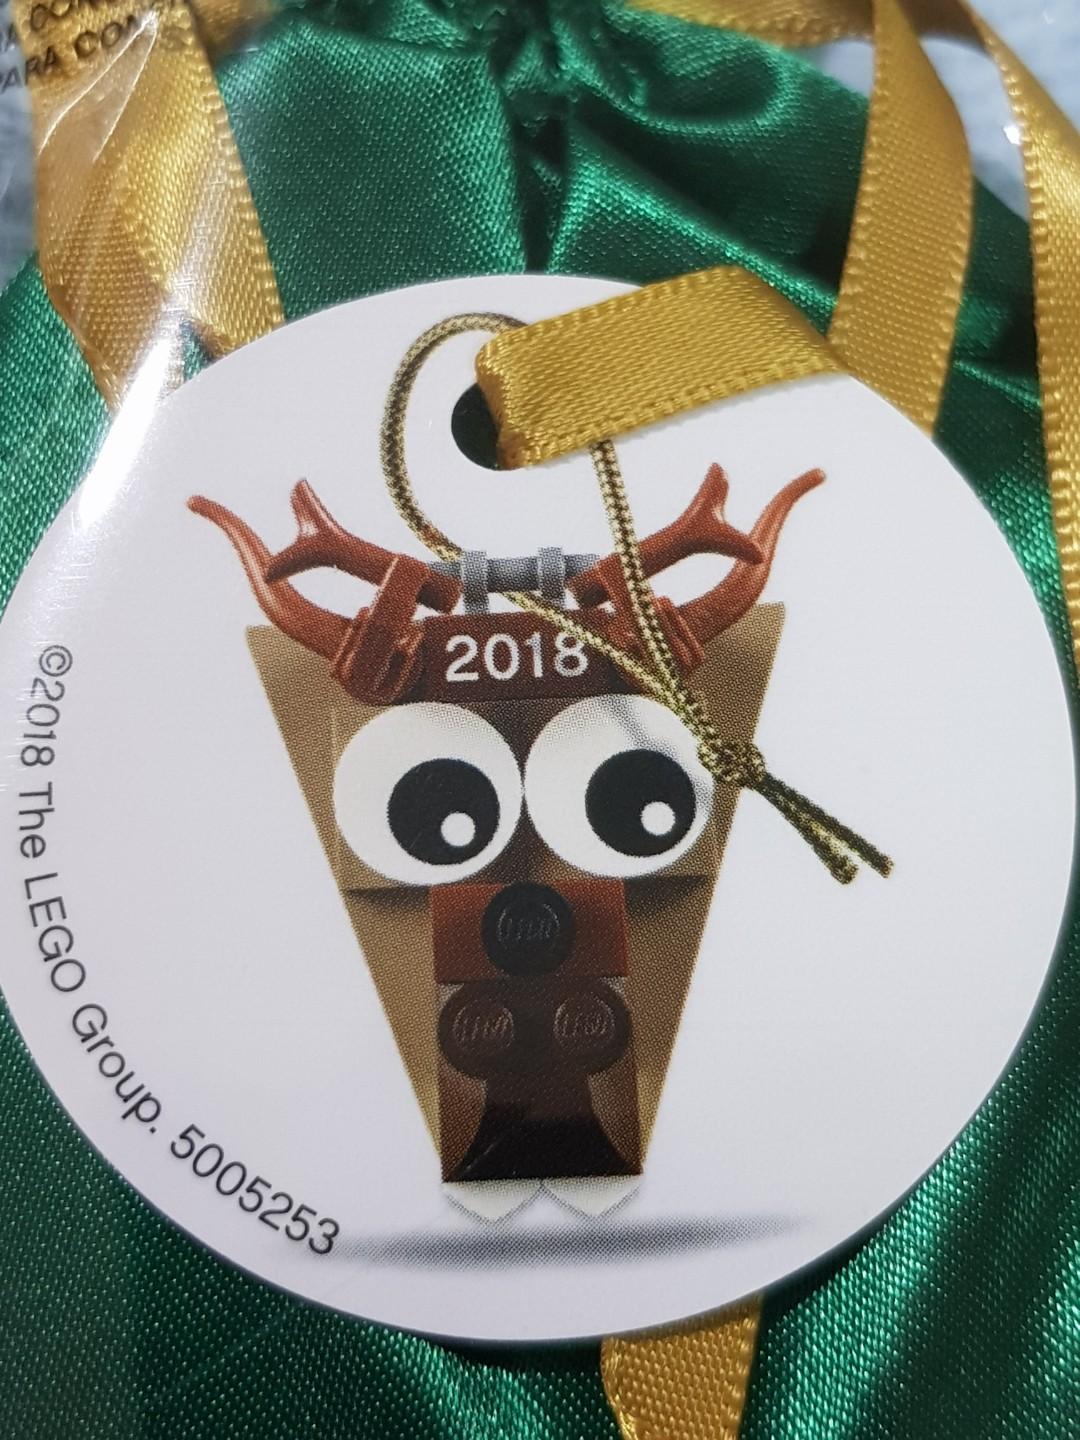 lego reindeer ornament